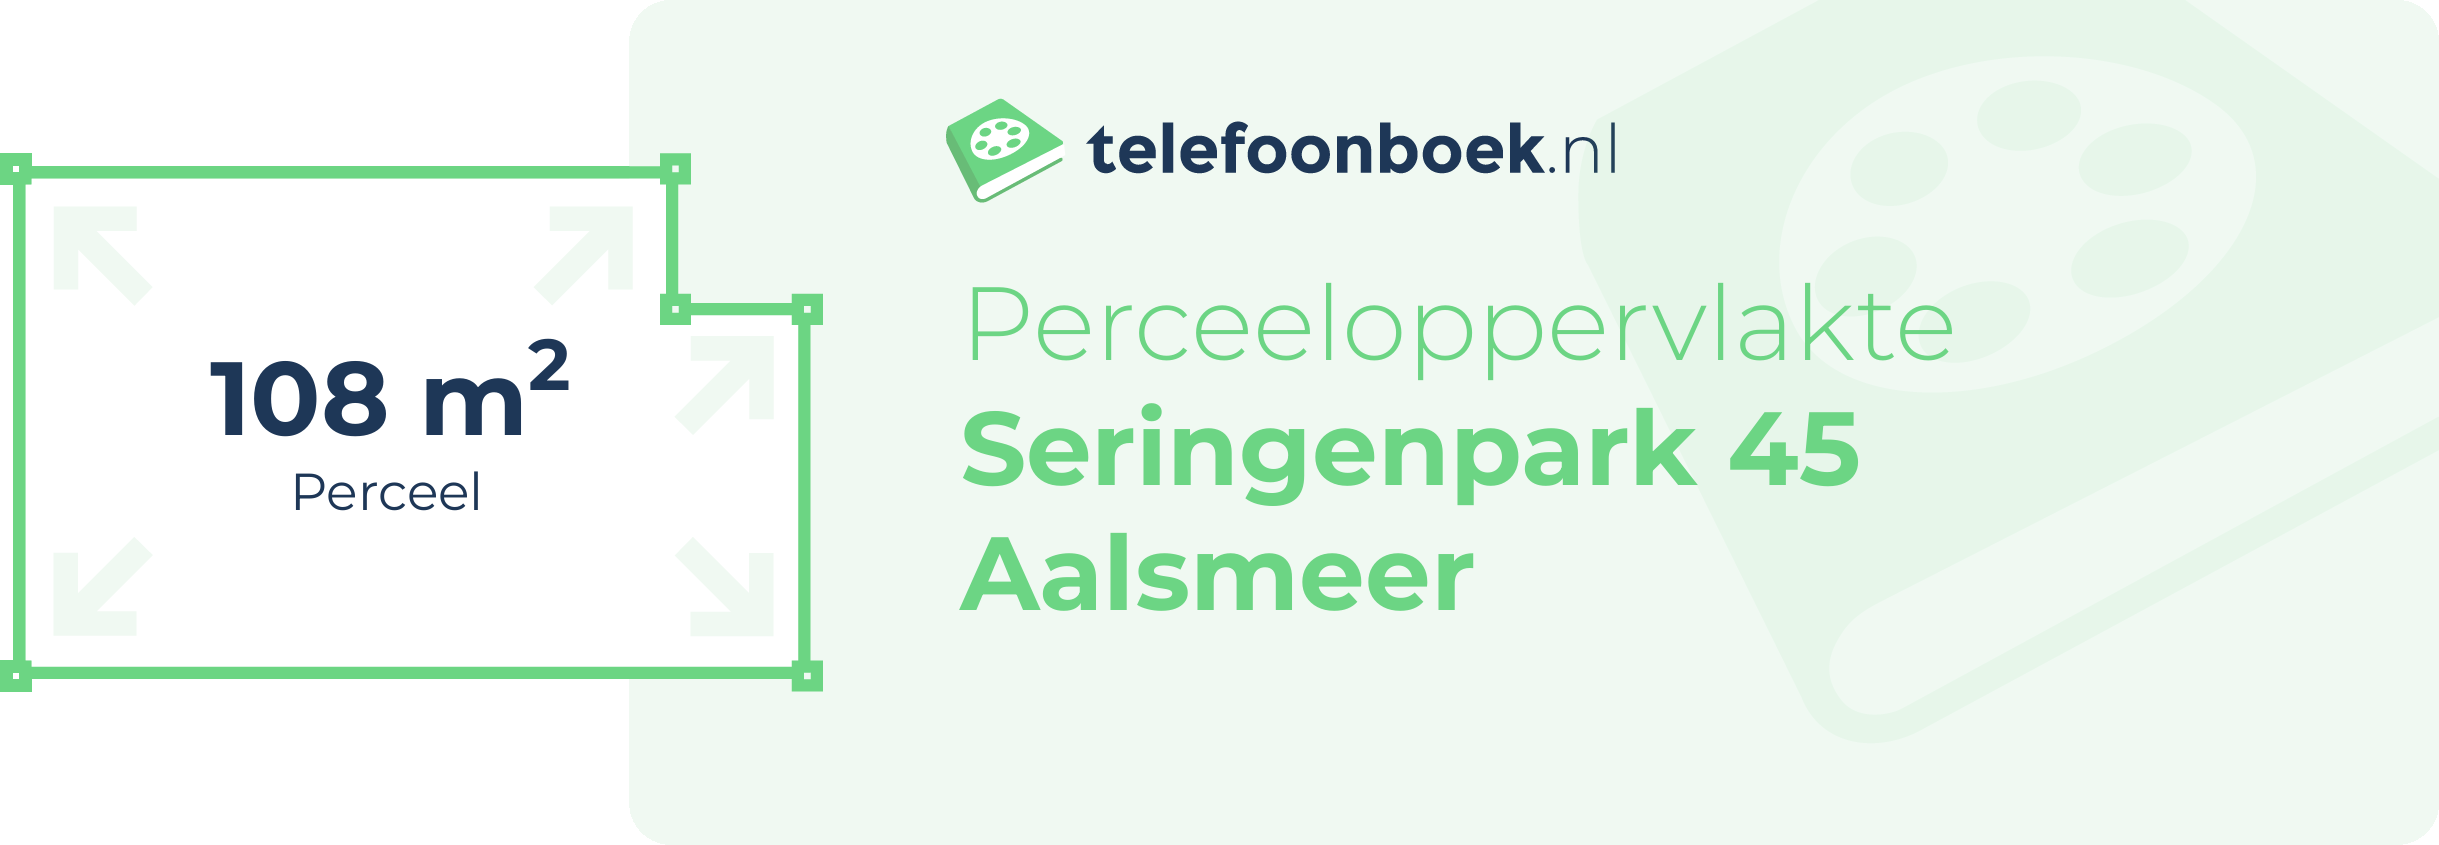 Perceeloppervlakte Seringenpark 45 Aalsmeer